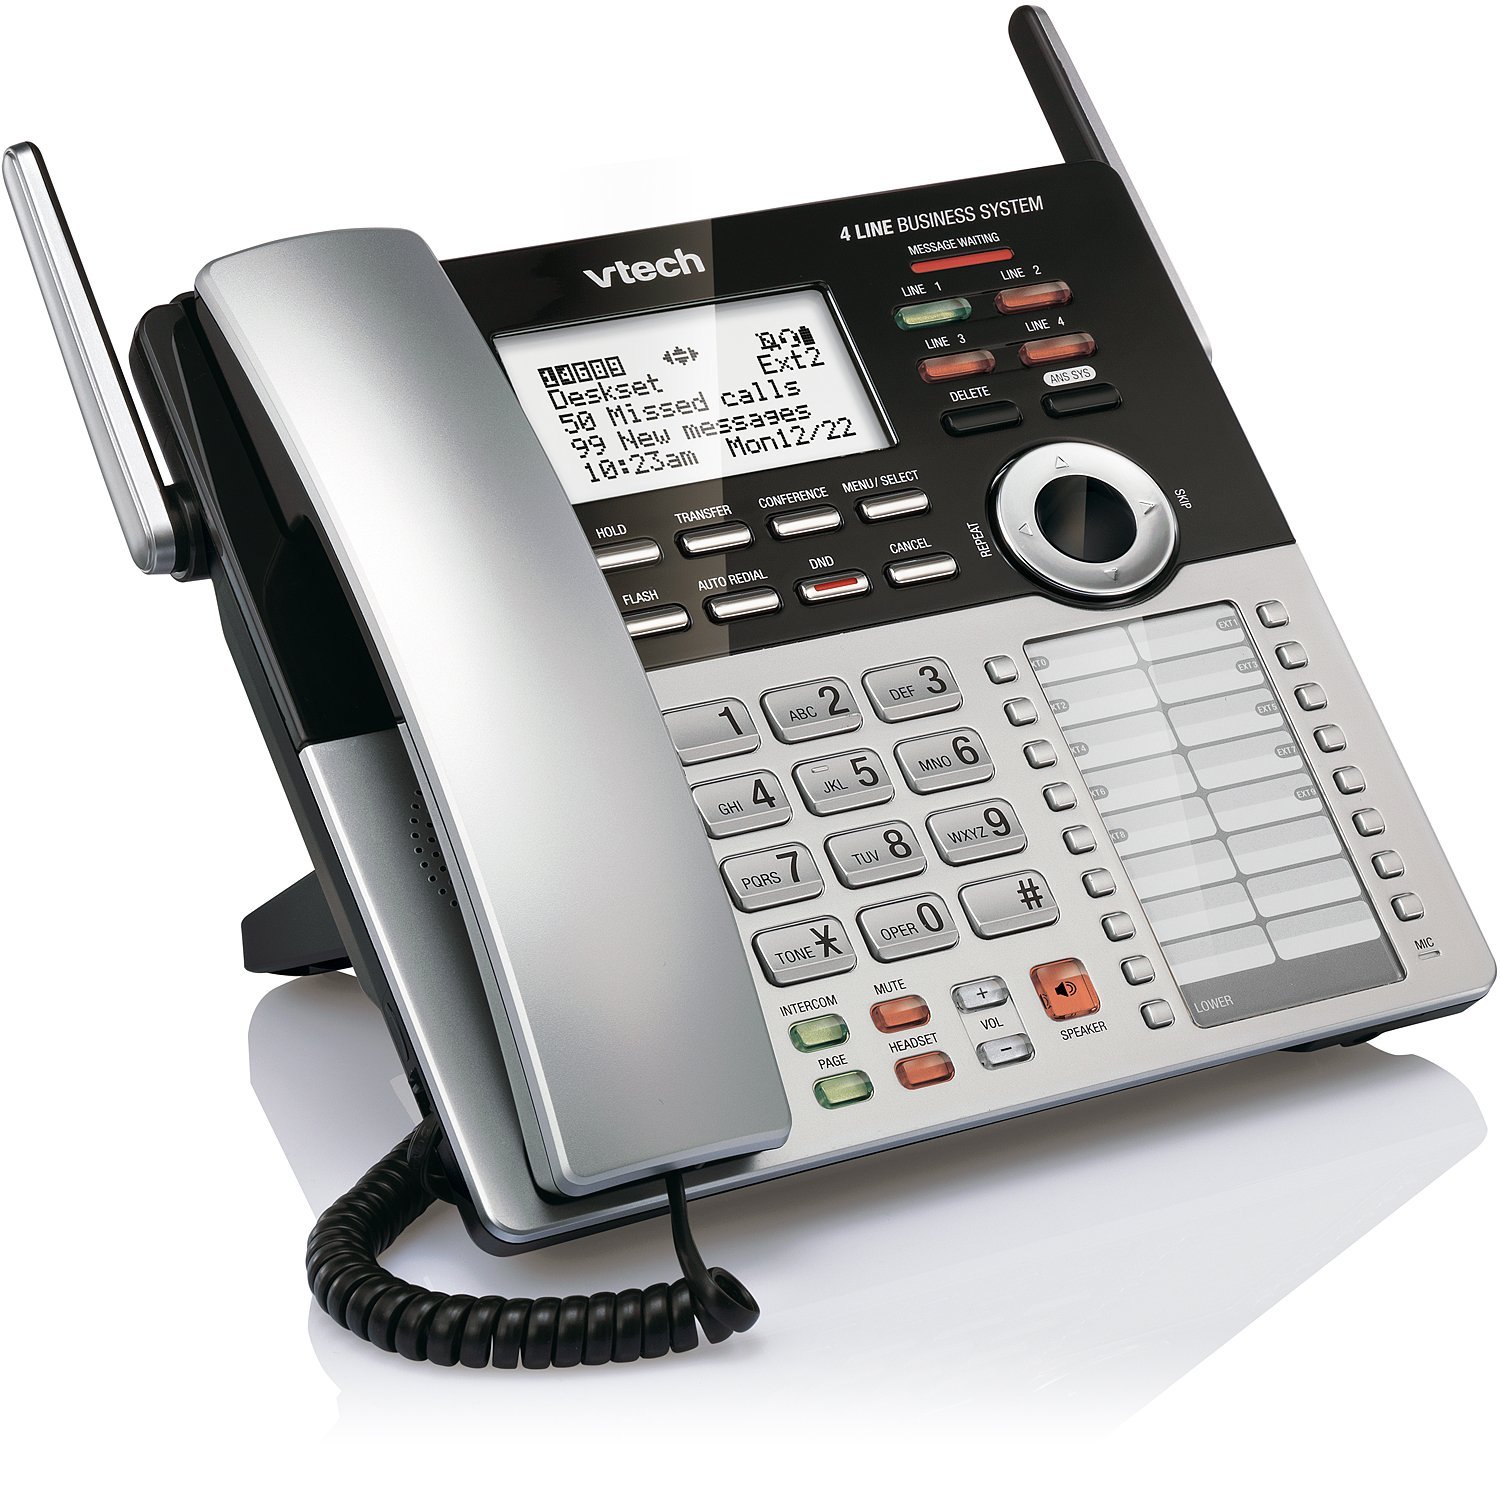 VTech CM18245 Extension Deskset for VTech CM18845 Small Business Office Phone System